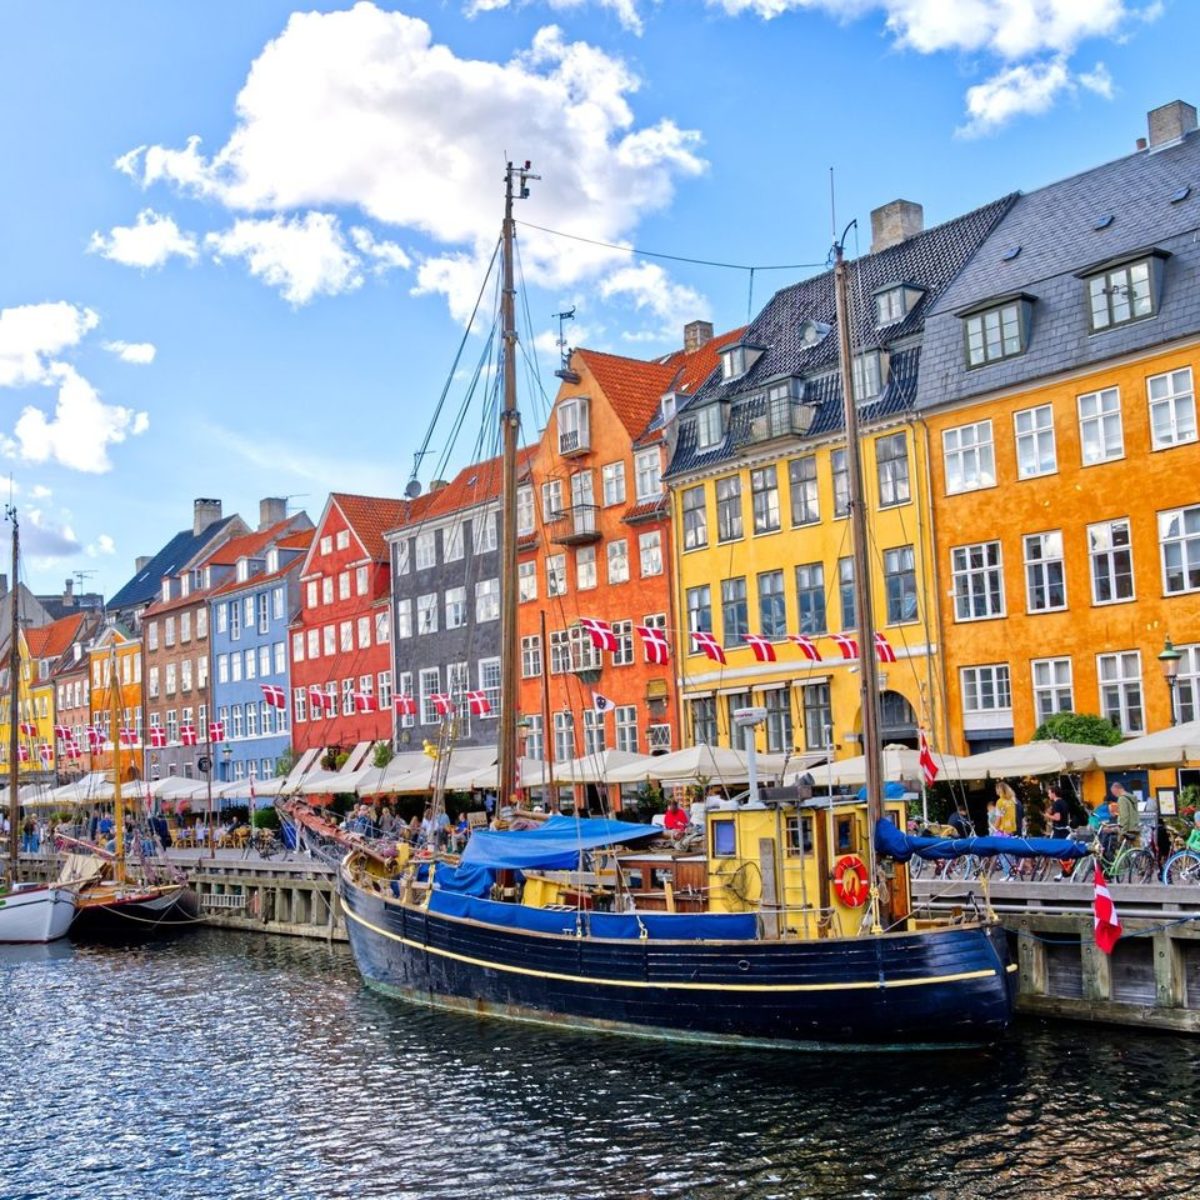 UIA. Συνέδριο Αρχιτεκτονικής της Κοπεγχάγης 2022. Πρόγραμμα & εγγραφές διαθέσιμα από 26 Σεπτεμβρίου 2022